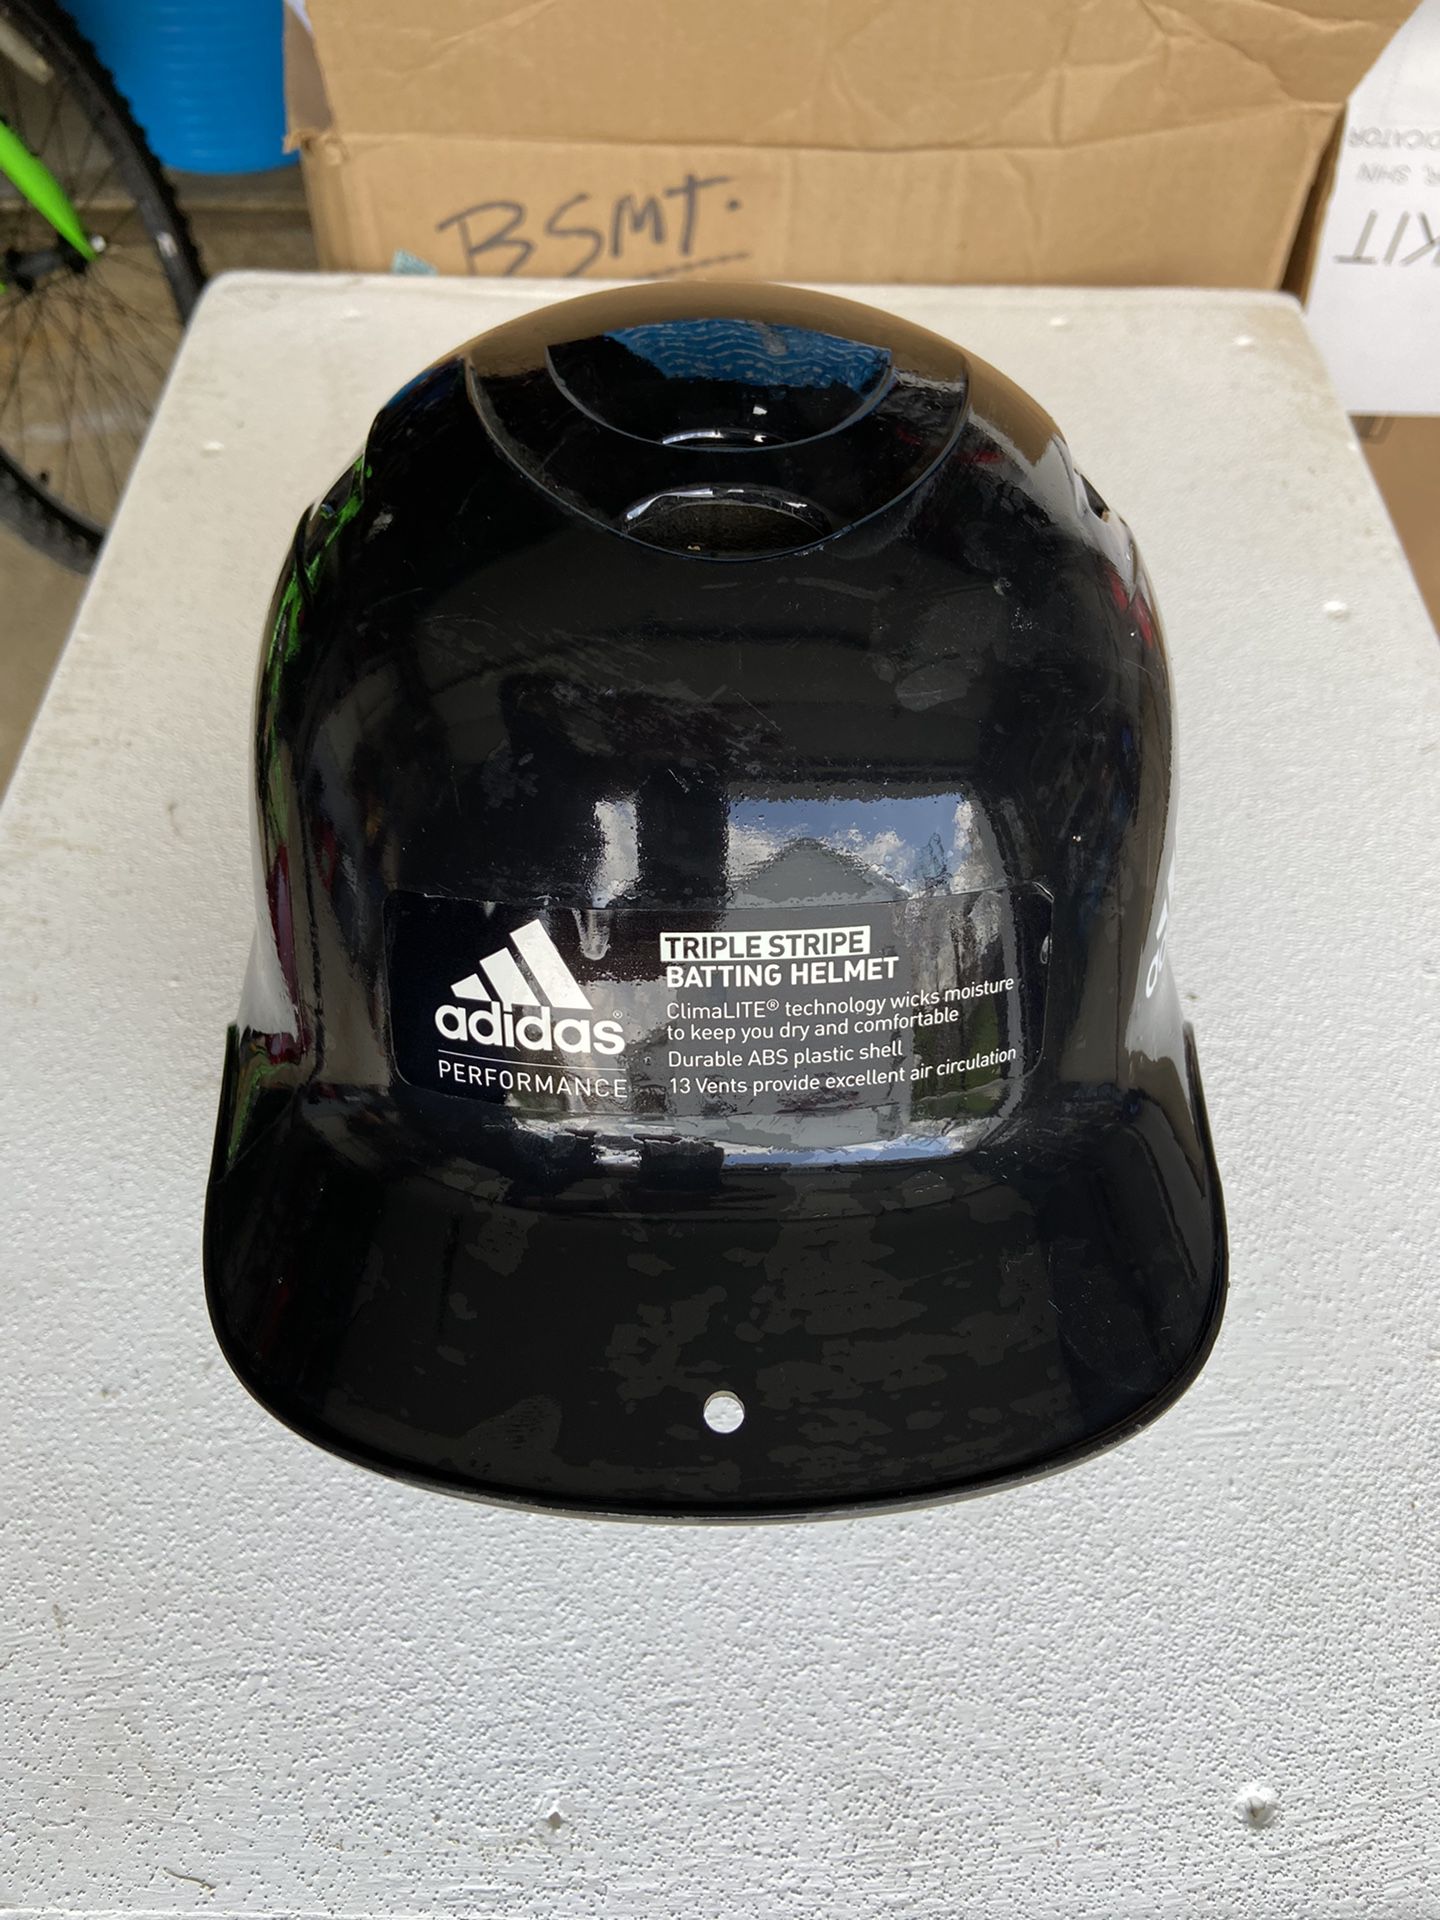 Adidas Batting Helmet 